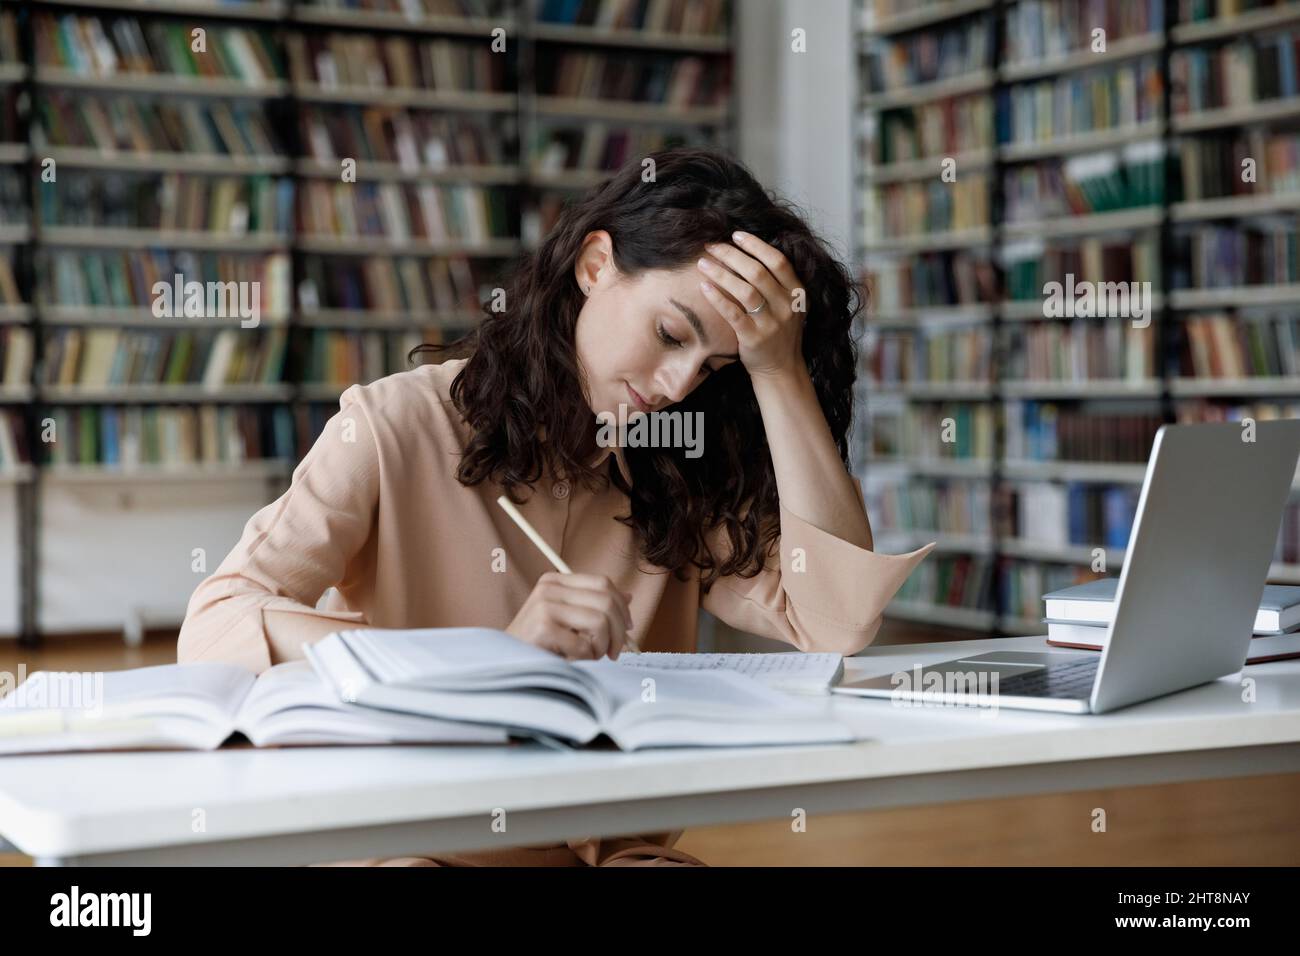 Infelice stressò la giovane ispanica che si sentiva stanca studiando in biblioteca. Foto Stock